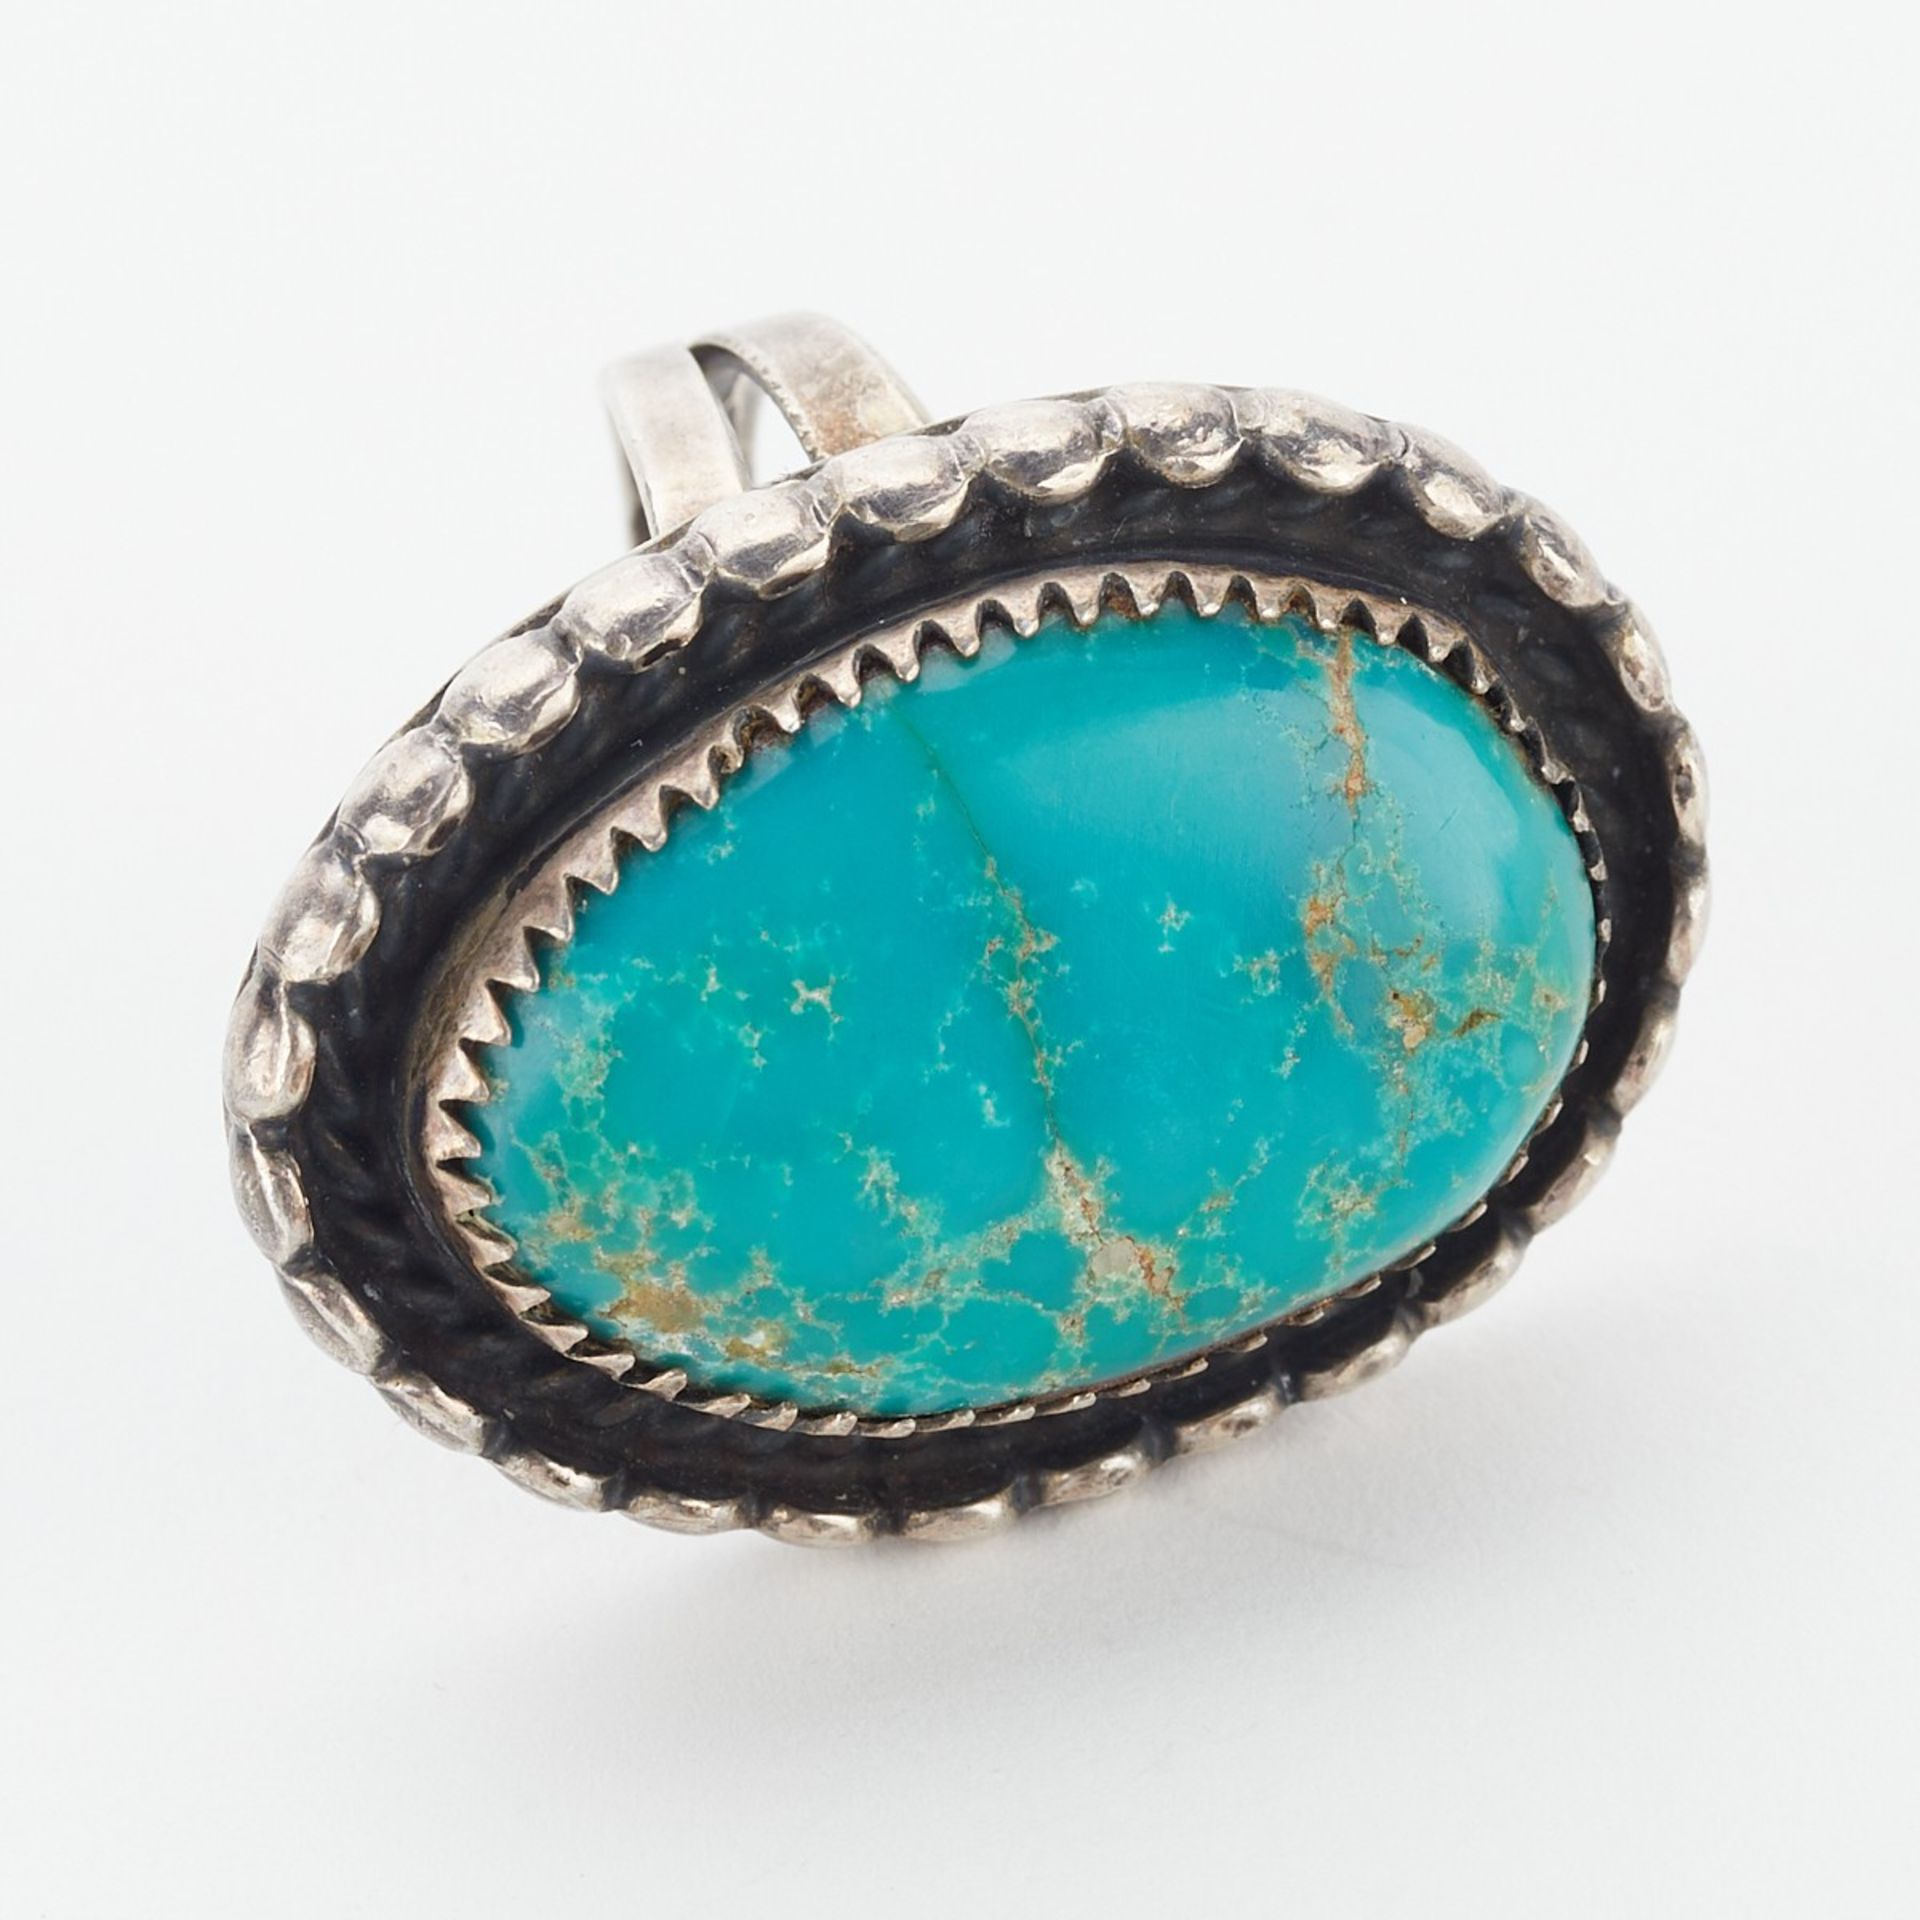 6 Southwest Turquoise Jewelry Rings, Pin, Bracelet - Image 13 of 16